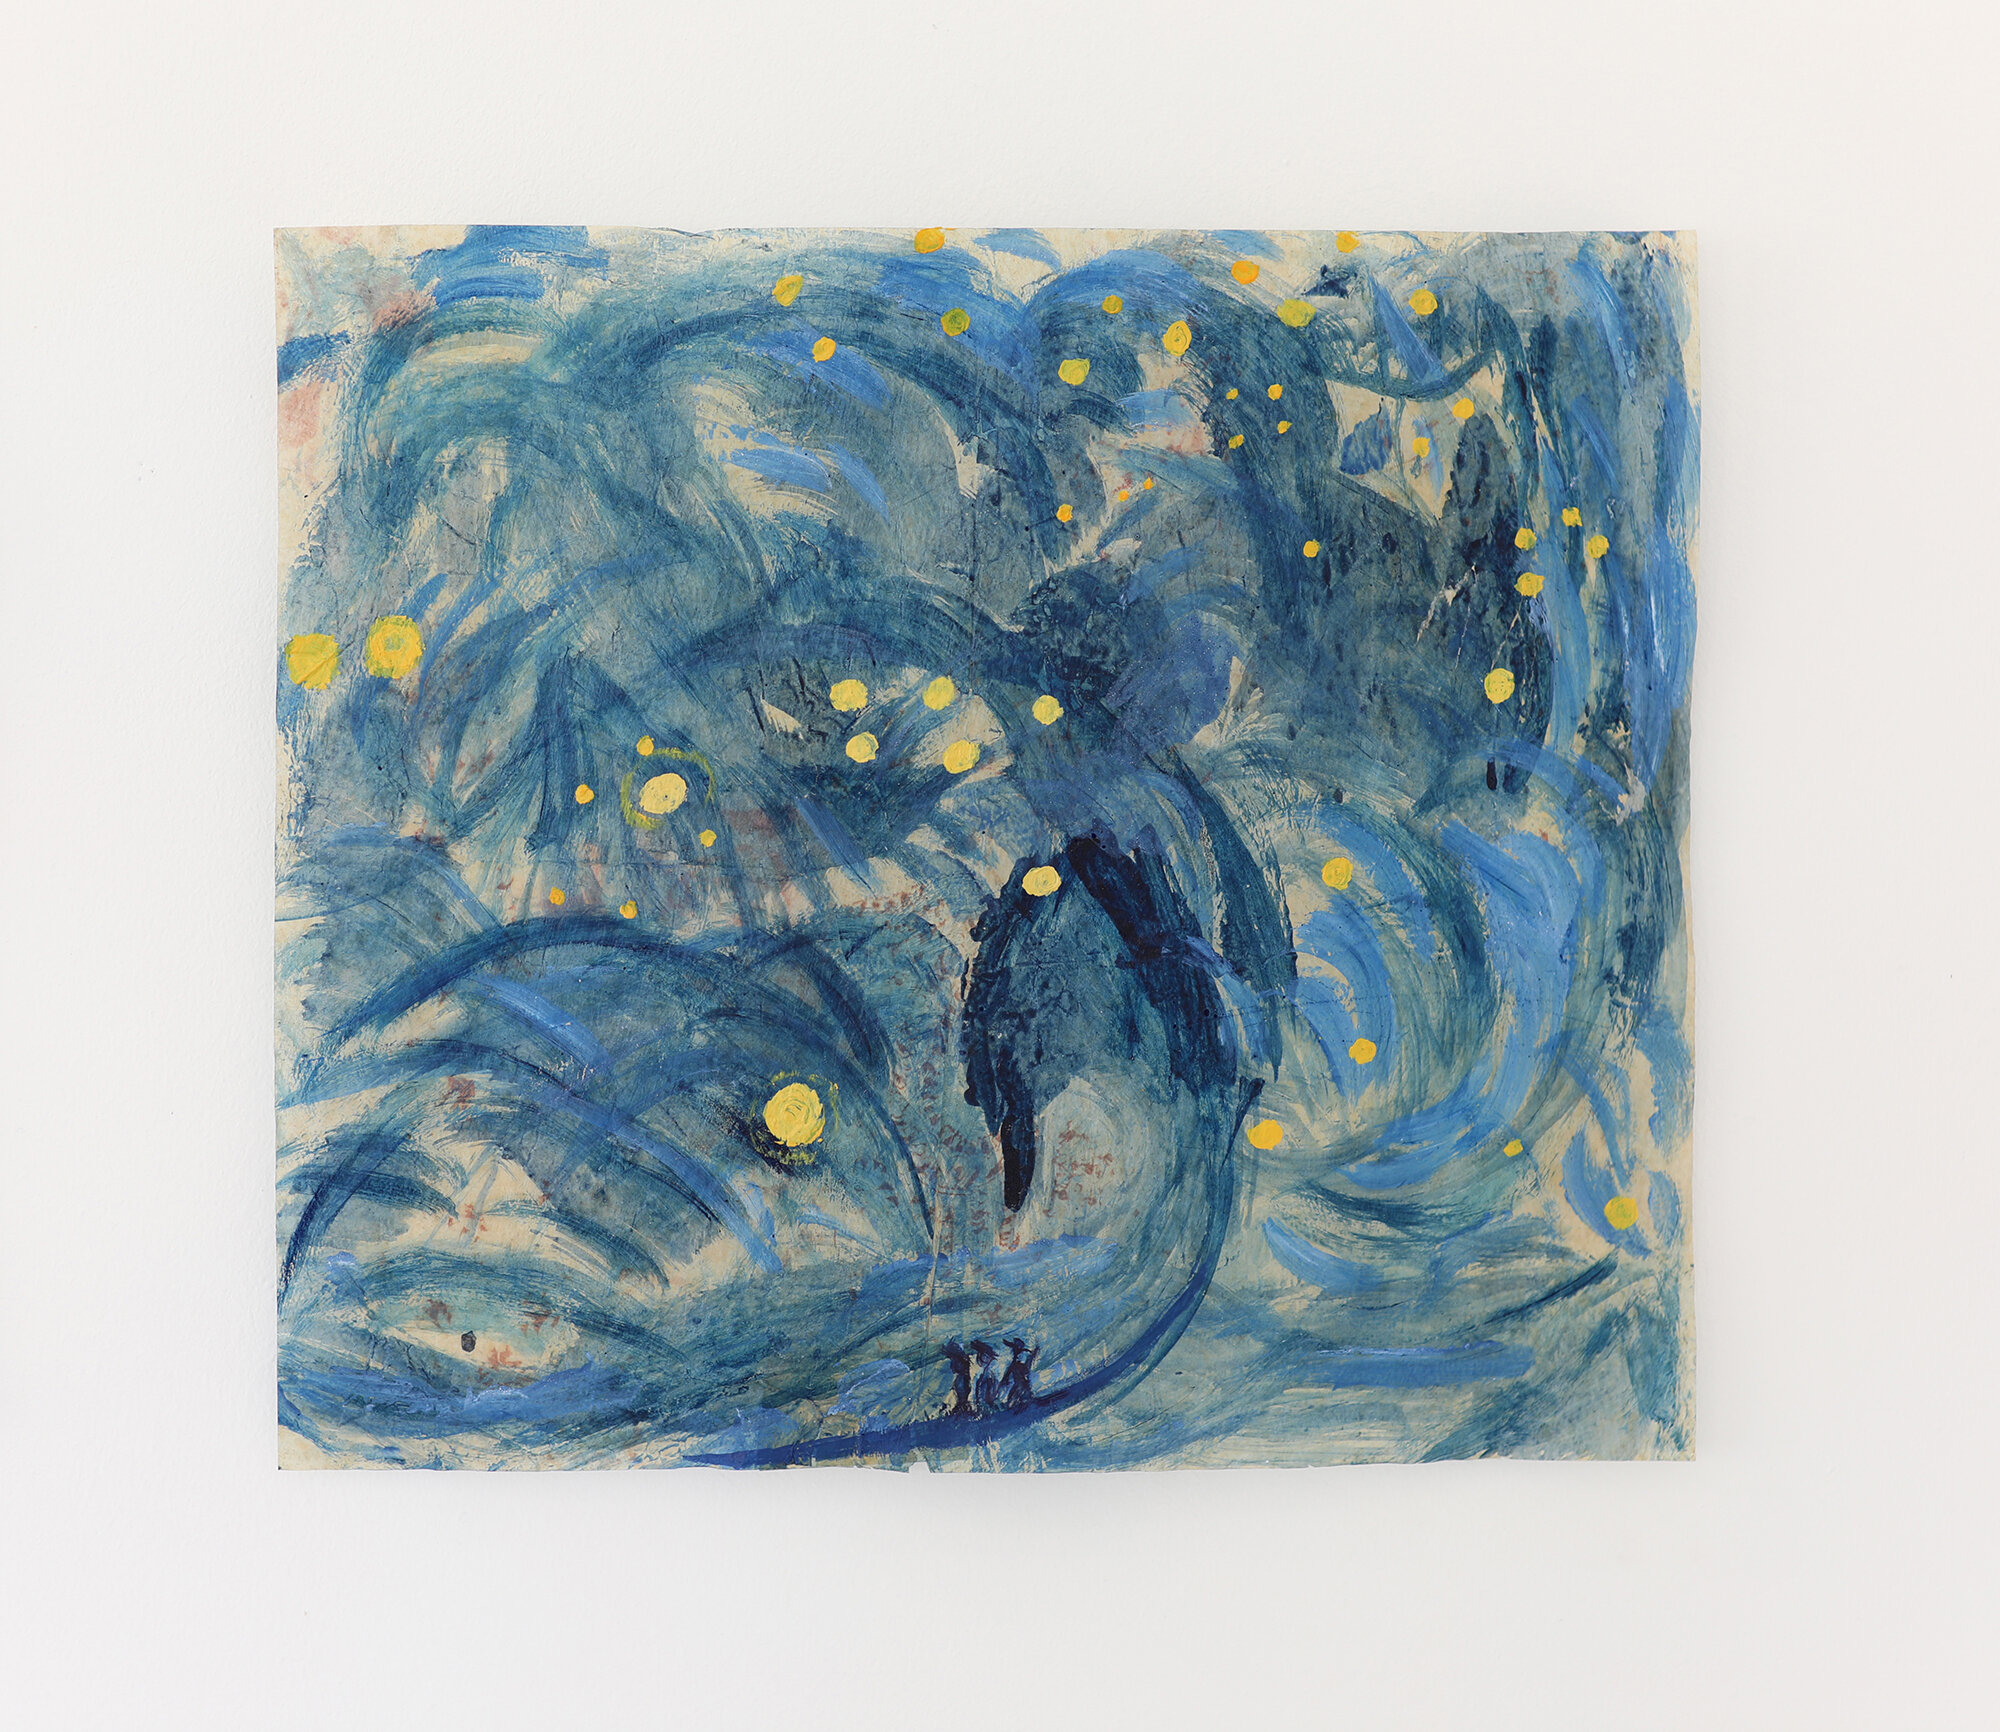   “La nuit étoilée I”, (« The starry night I »)  2020, mixed media on found paper, 39x34cm 